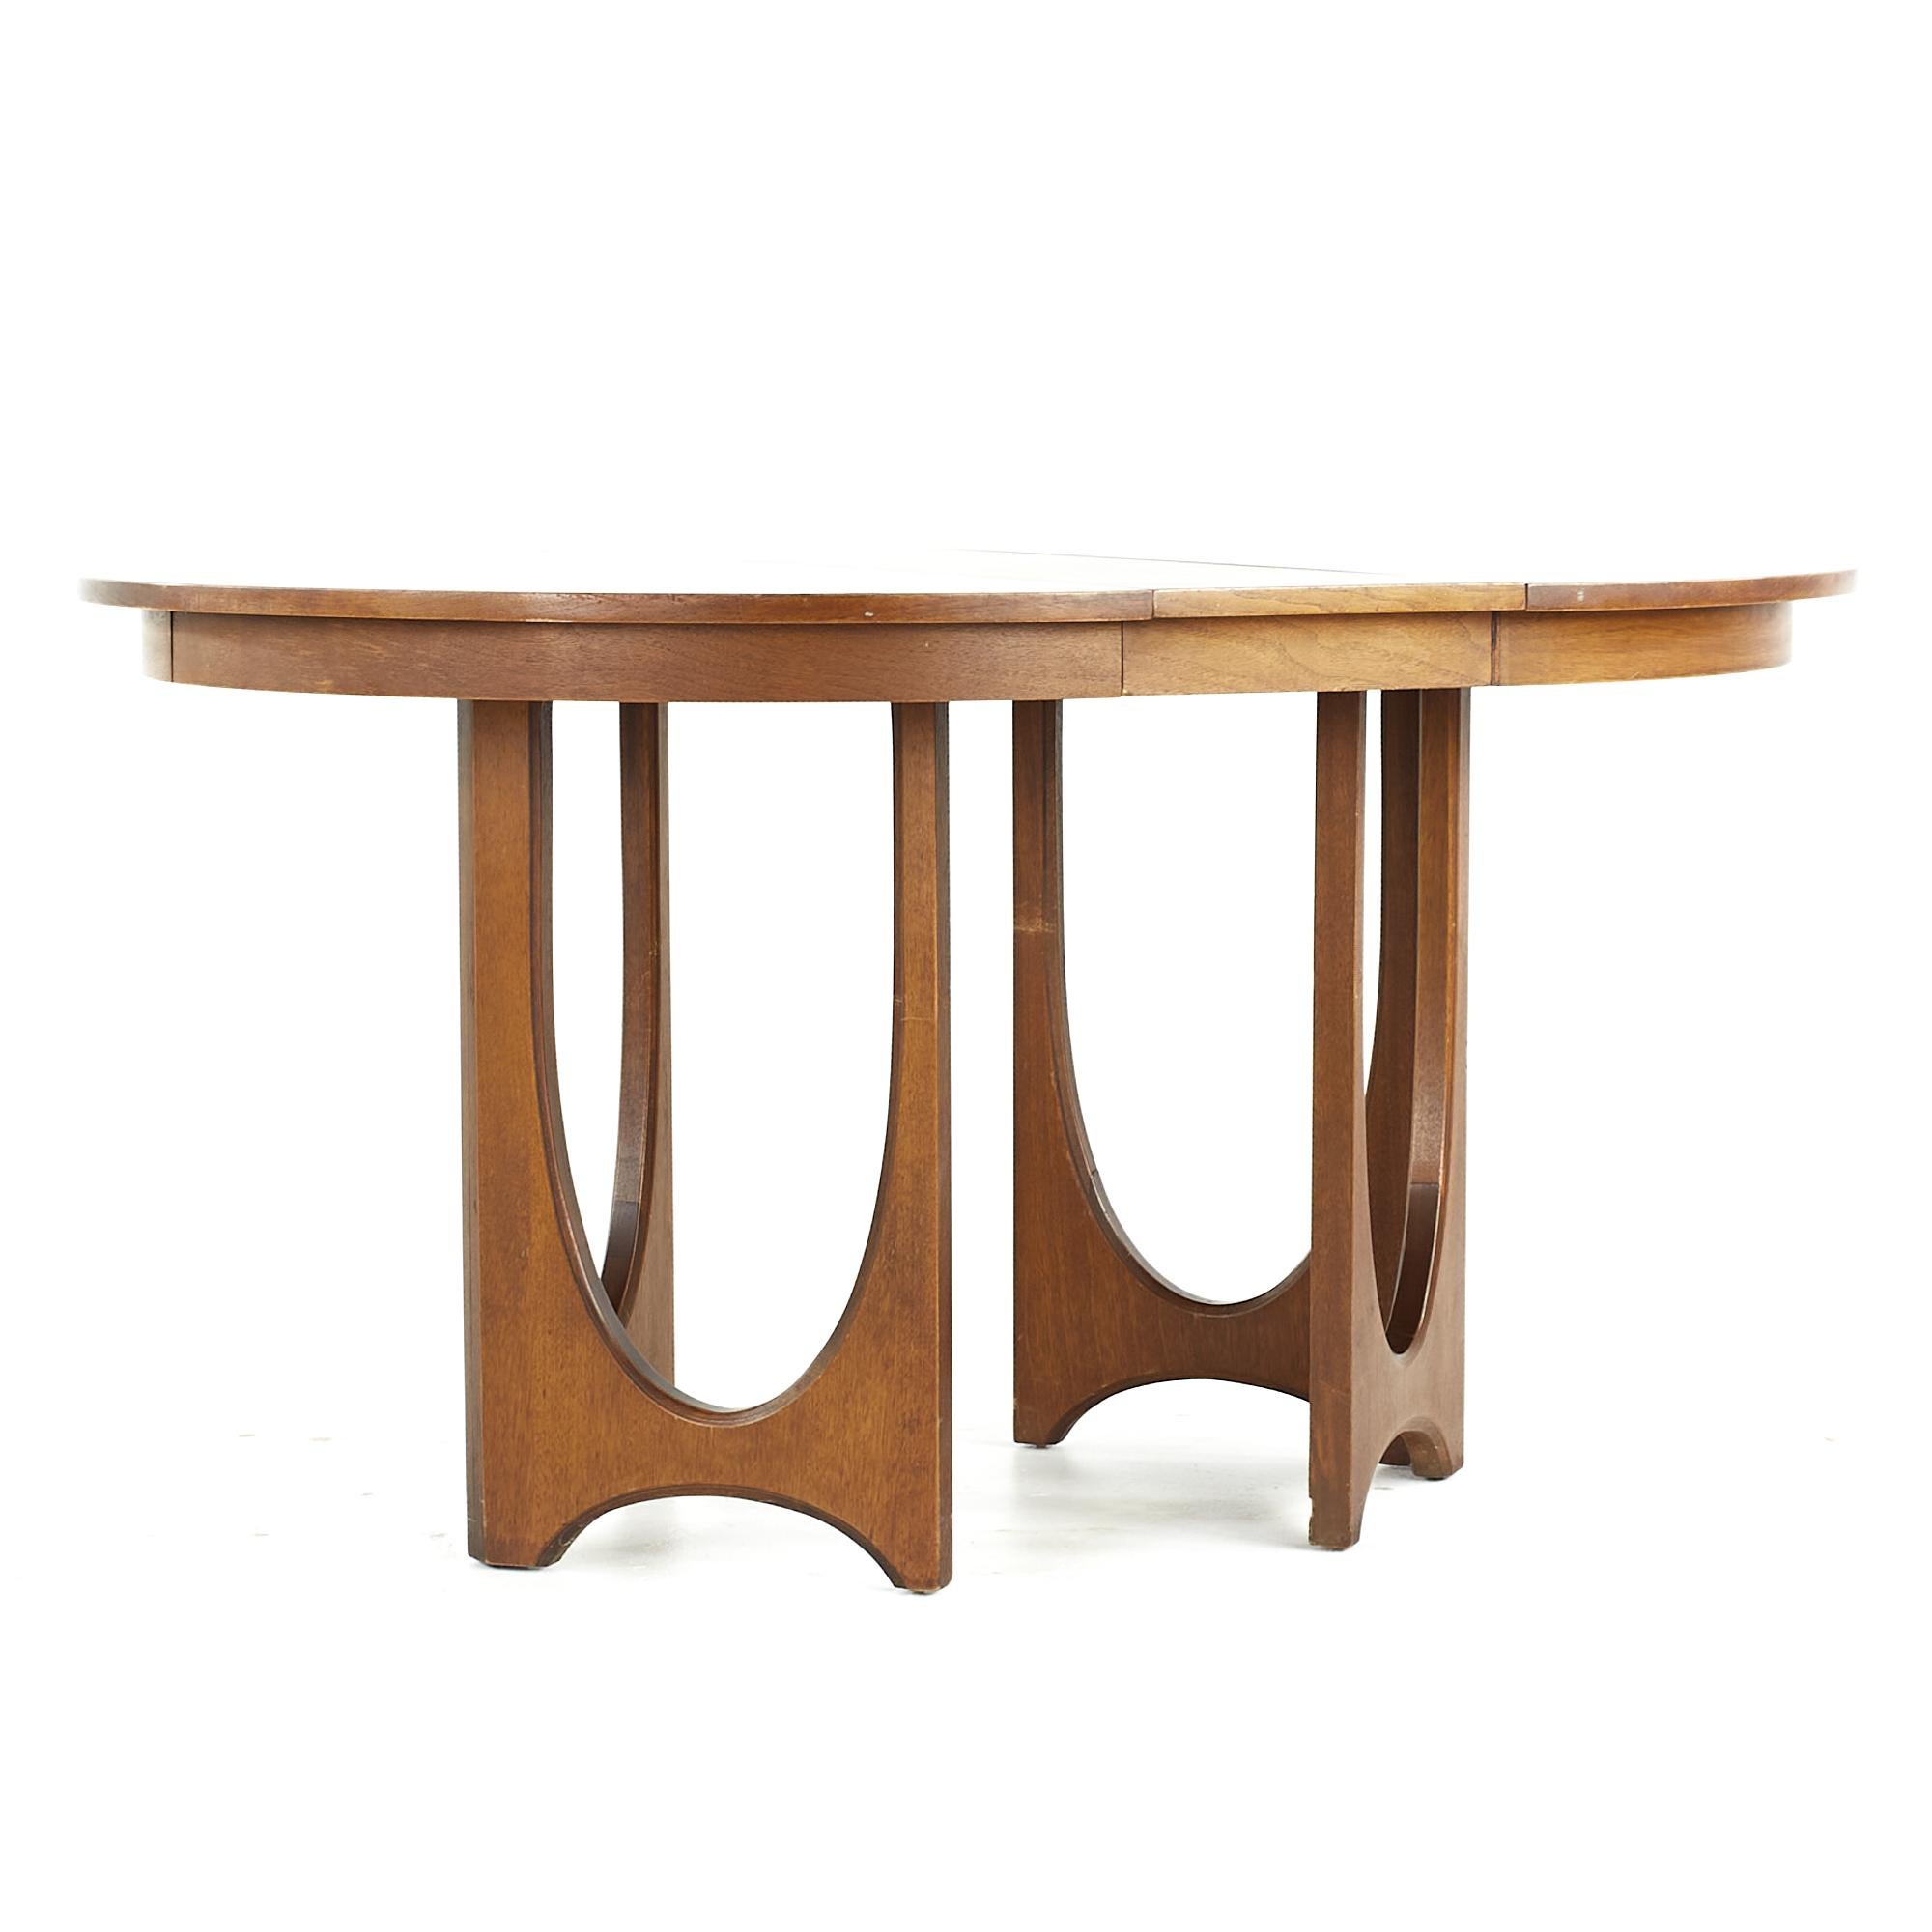 Late 20th Century Broyhill Brasilia Midcentury Walnut Pedestal Table with 3 Leaves